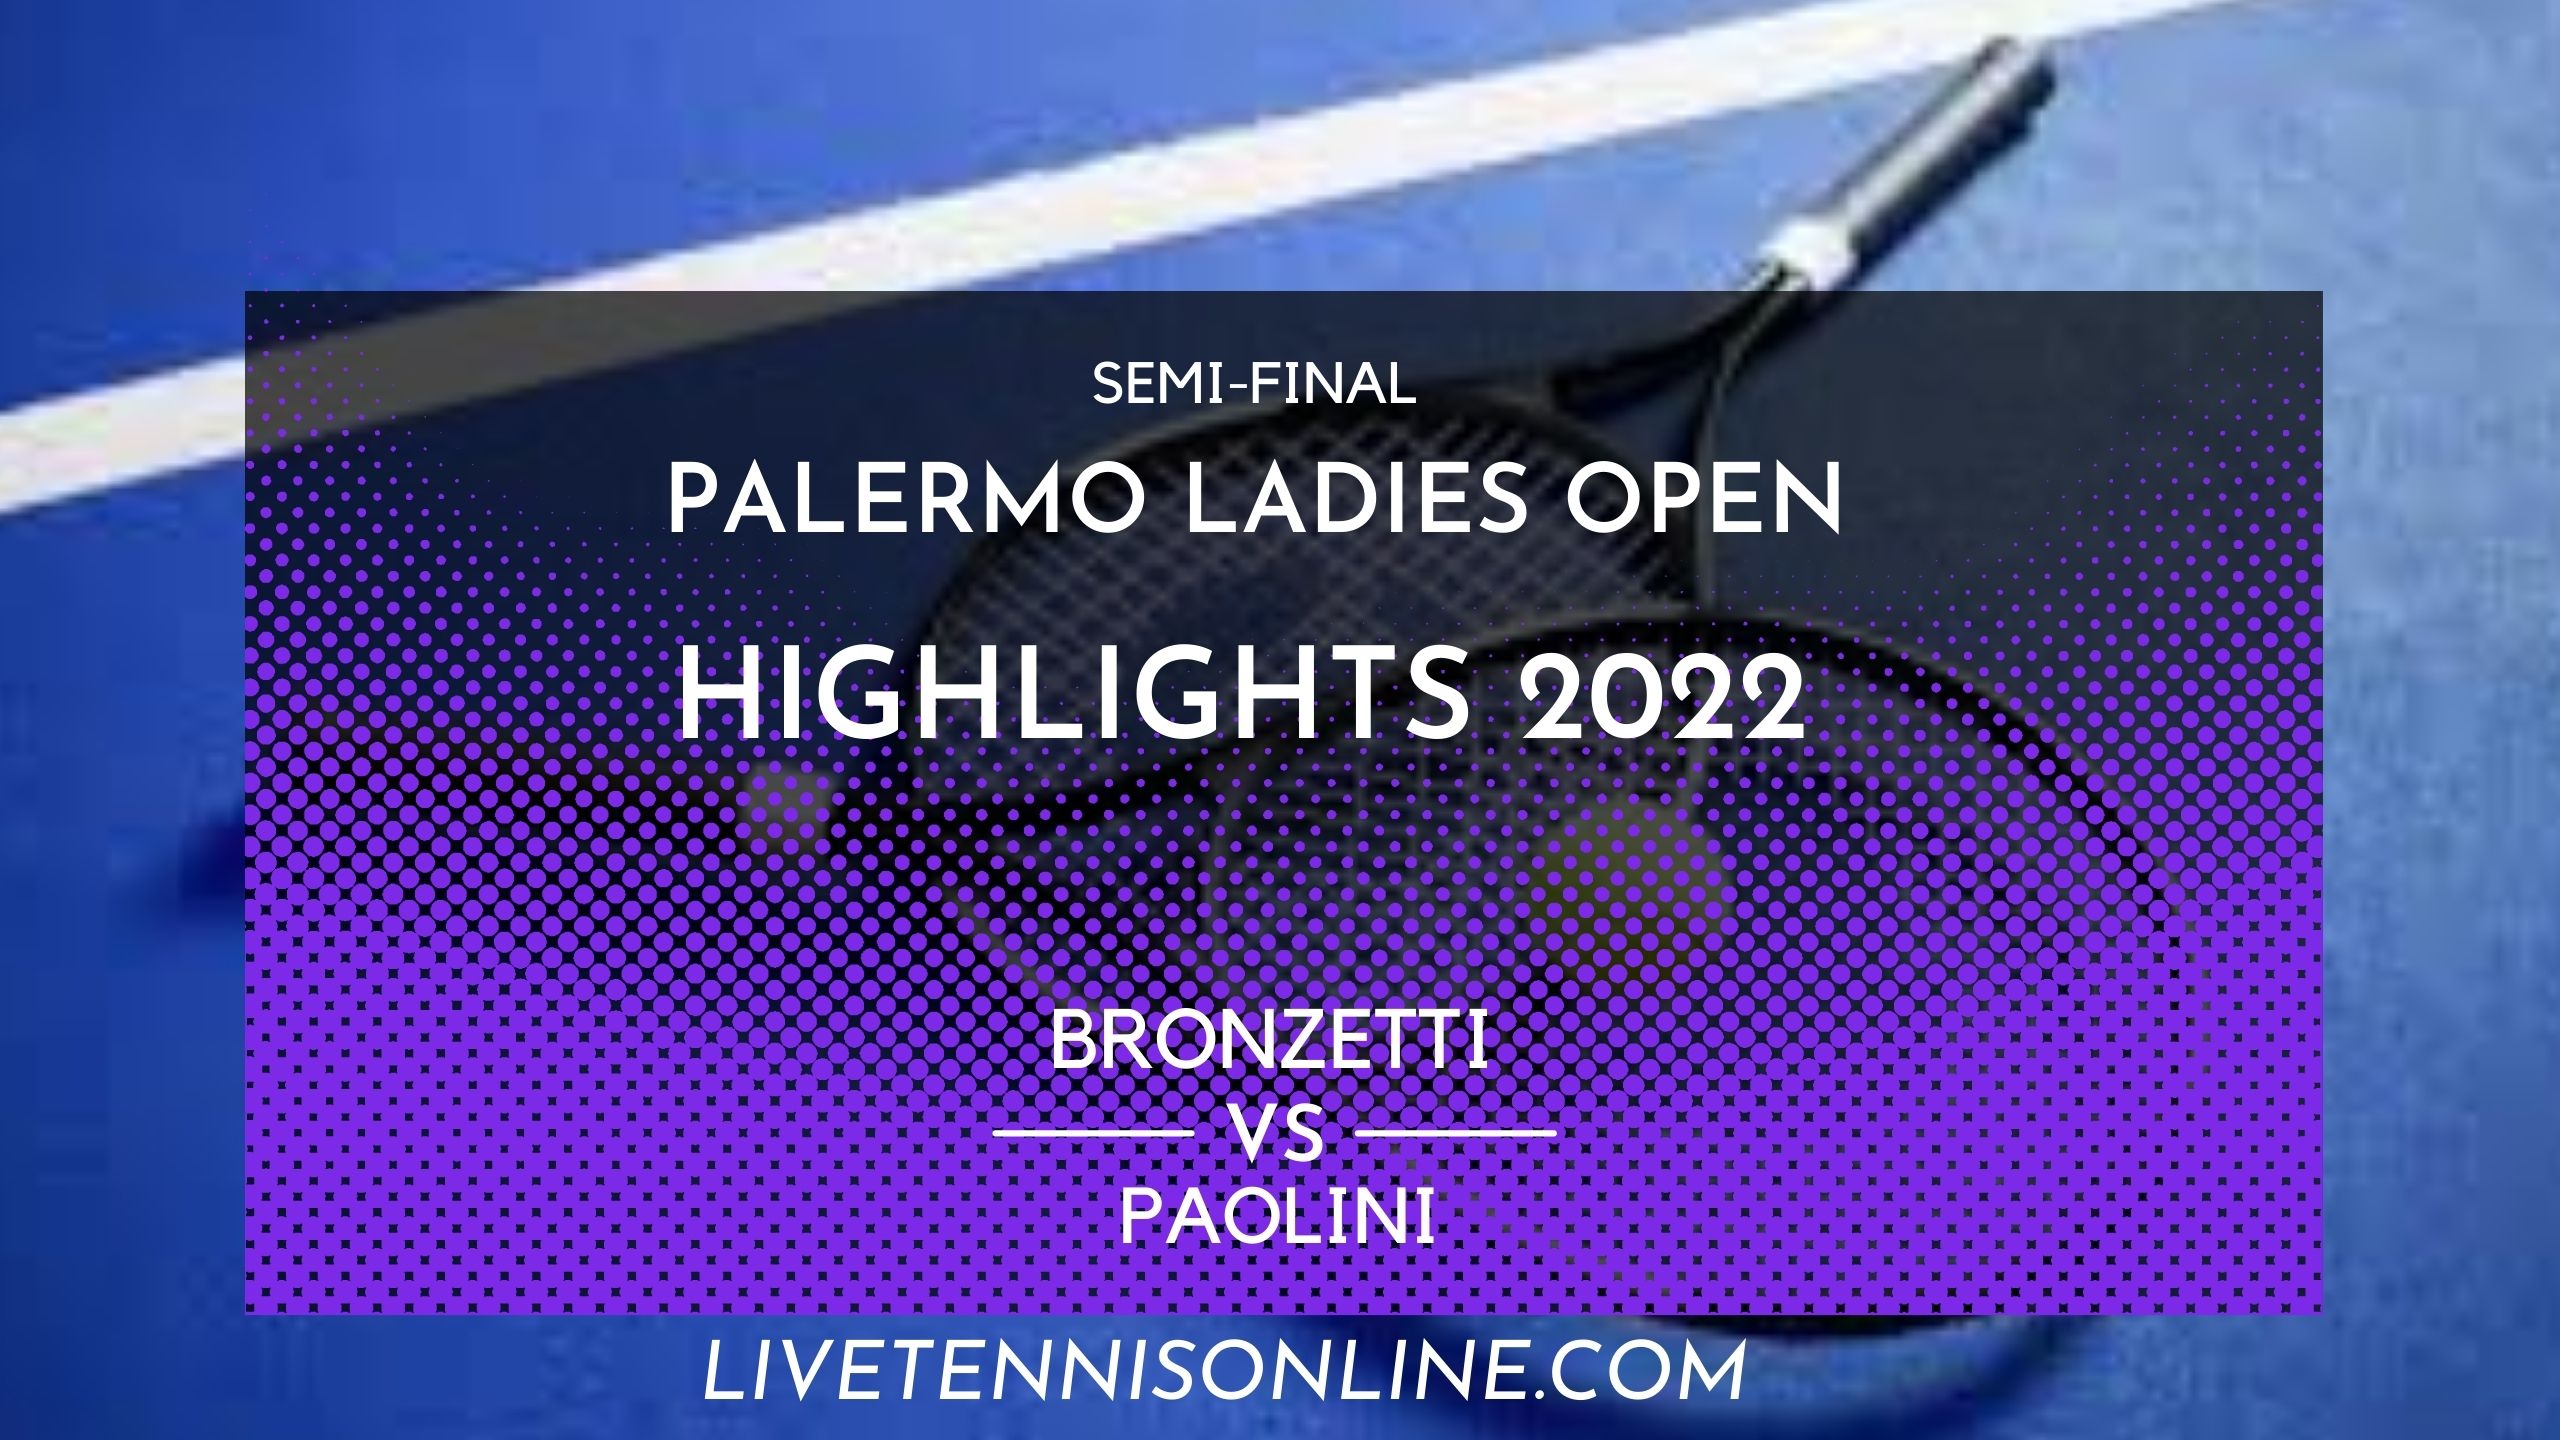 Bronzetti Vs Paolini SF Highlights 2022 Palermo Ladies Open